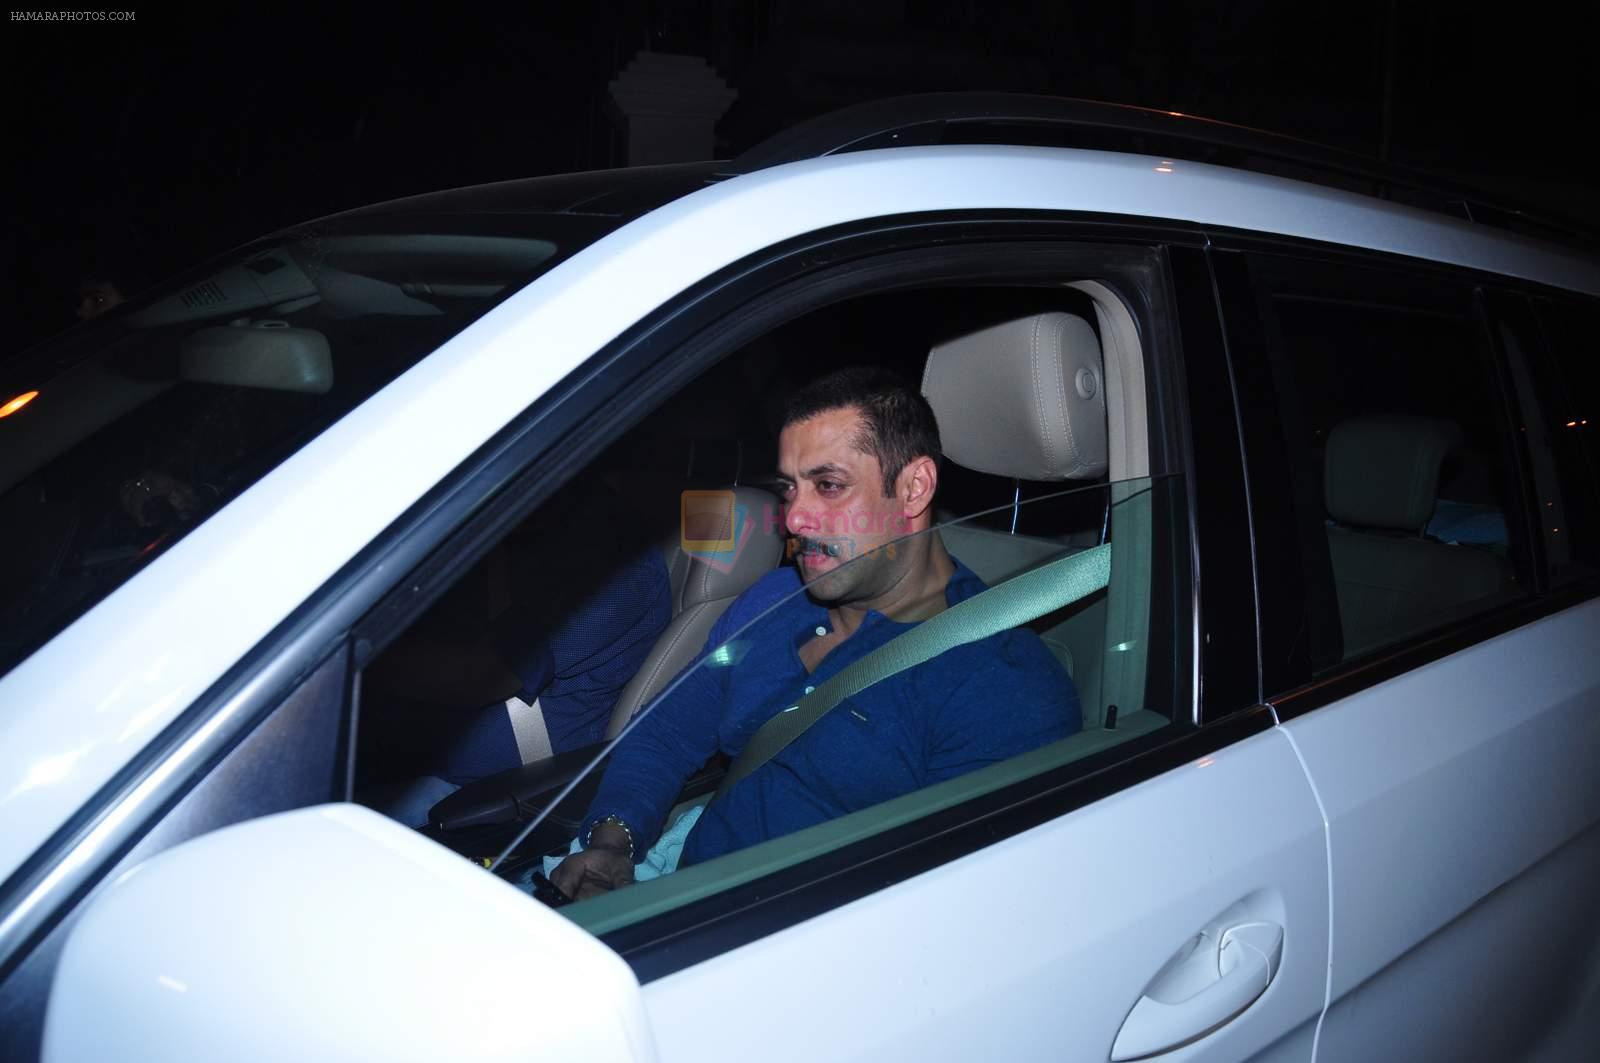 Salman Khan  at Anil kapoor's bday bash on 23rd Dec 2015